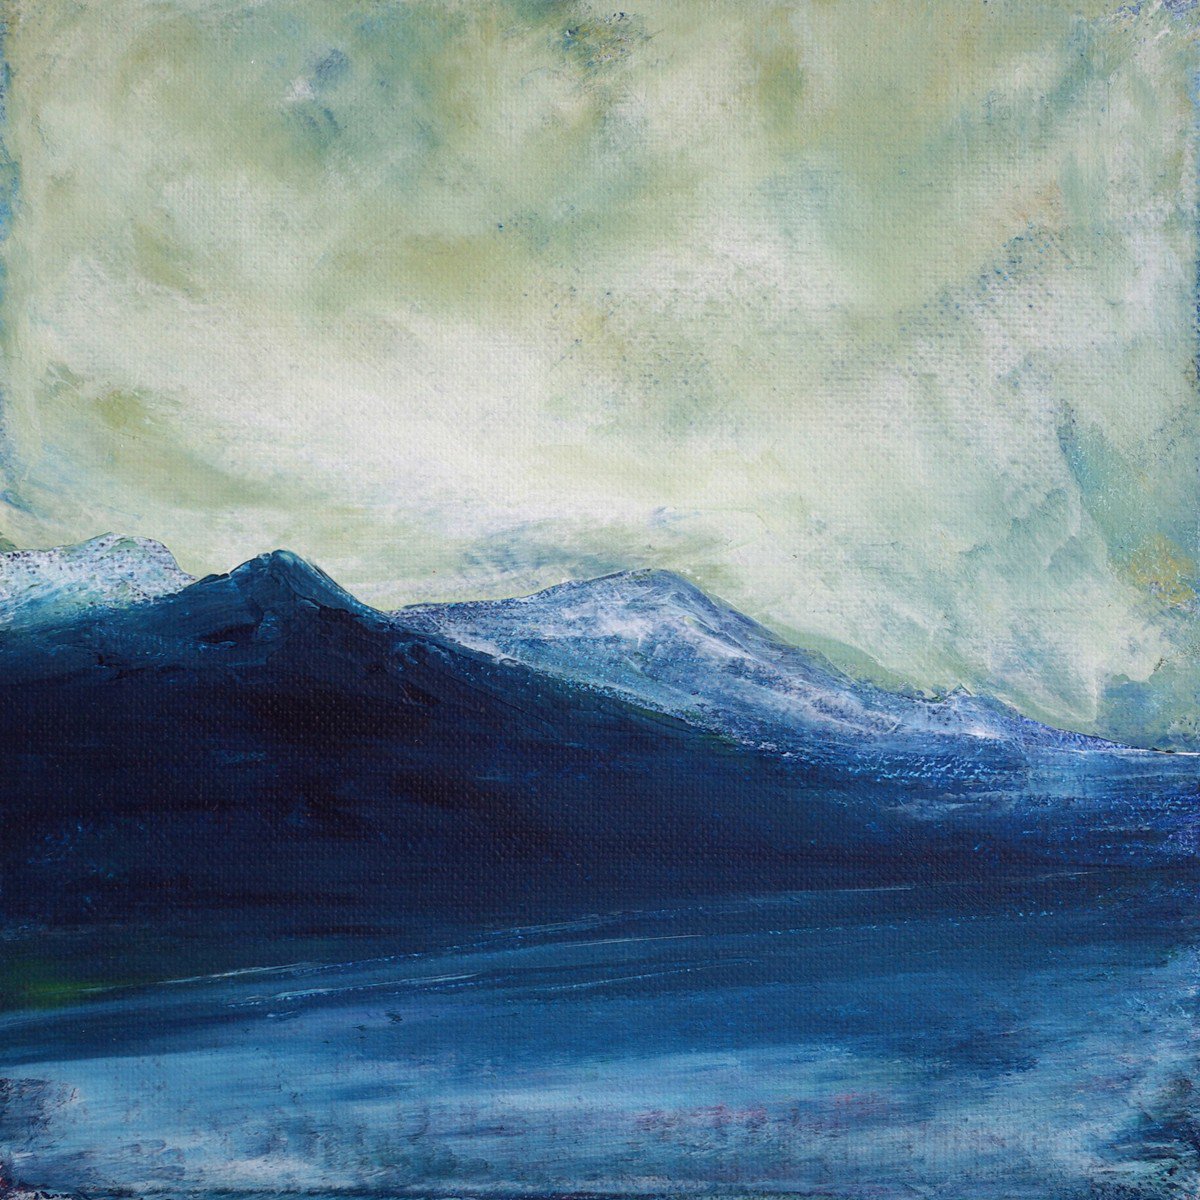 A ’mhaighdeann, Scottish winter mountain landscape snow scene by oconnart